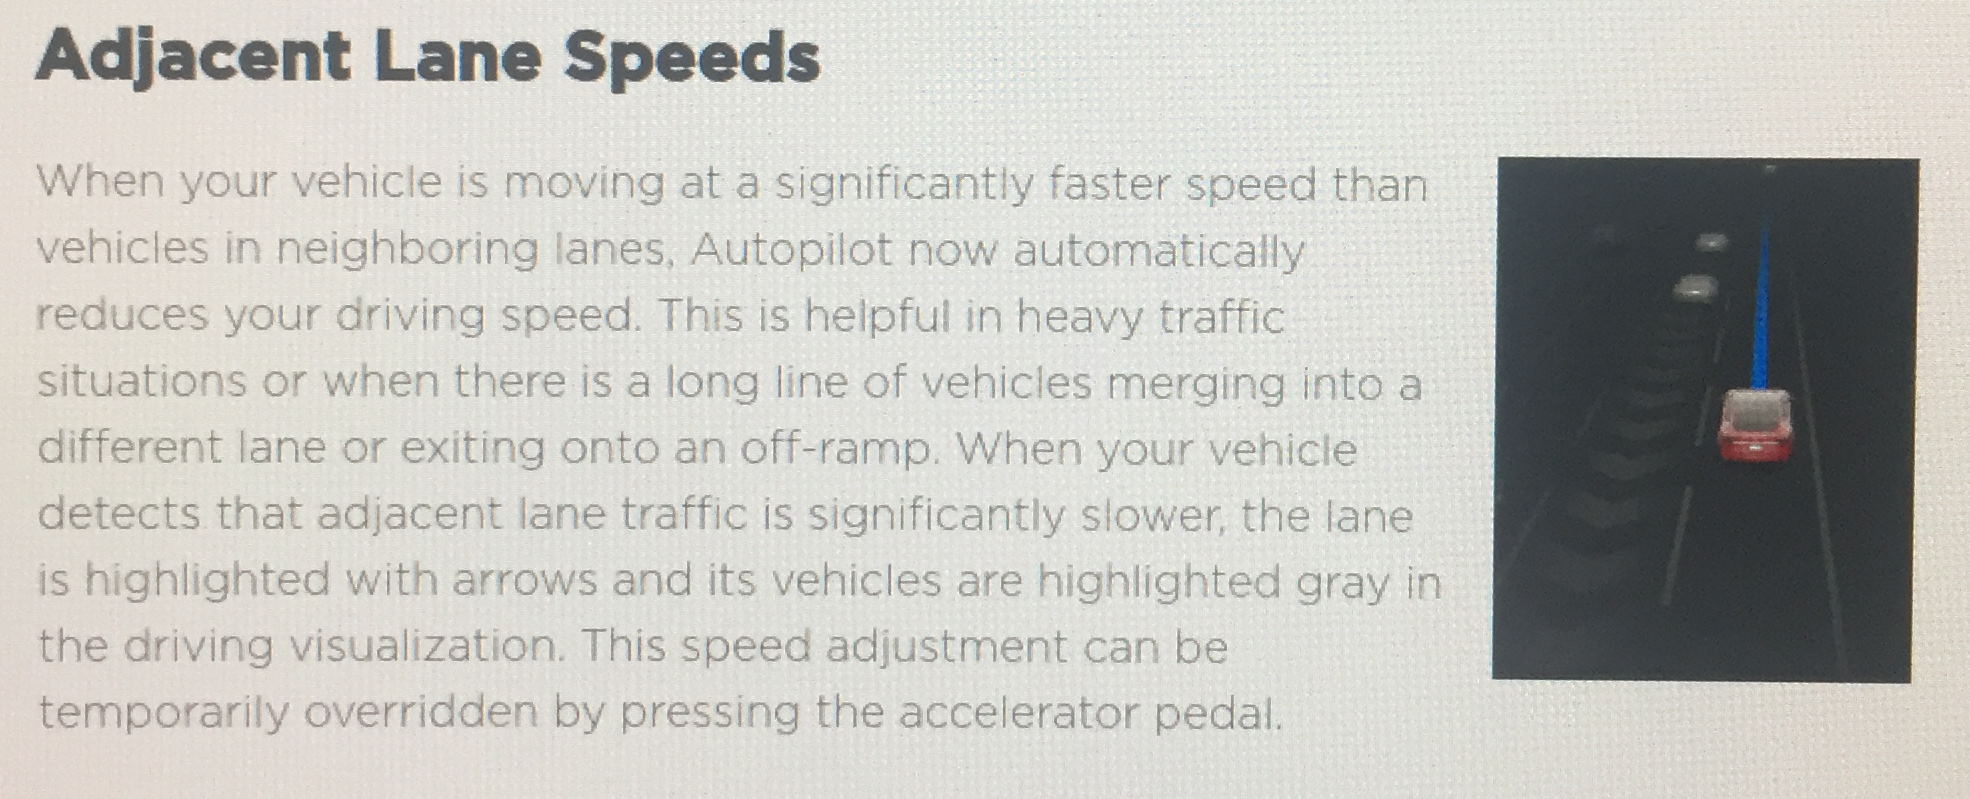 adjacent lane speeds.jpg